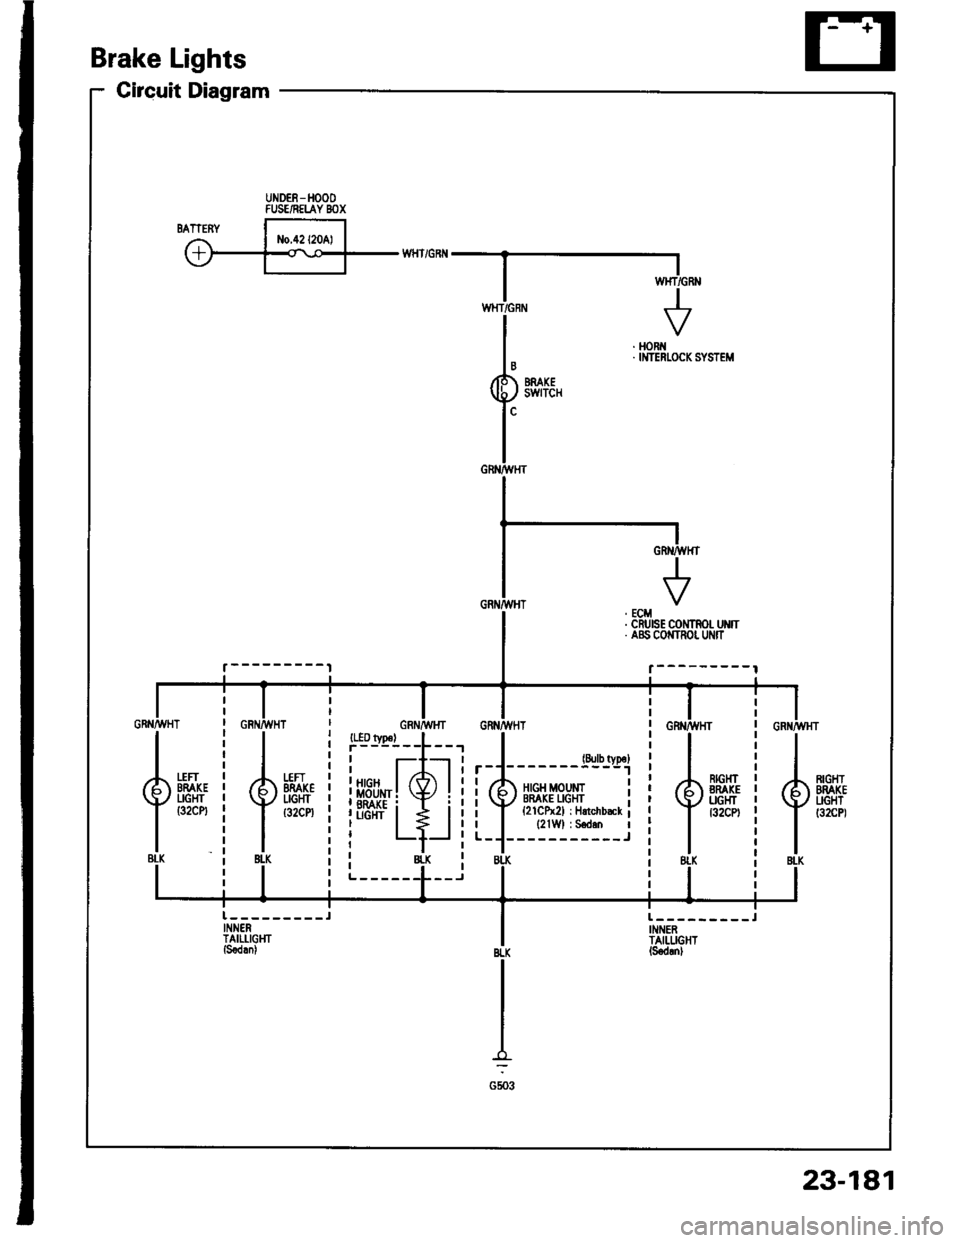 HONDA INTEGRA 1994 4.G User Guide Circuit Diagram
Brake Lights
UNDEE-HOOOFUSE/NELAY BOX
. HORi{. IMTERI.OCK SYSTEM
{.BLK
*H-i
{.{u8tK
23-181 